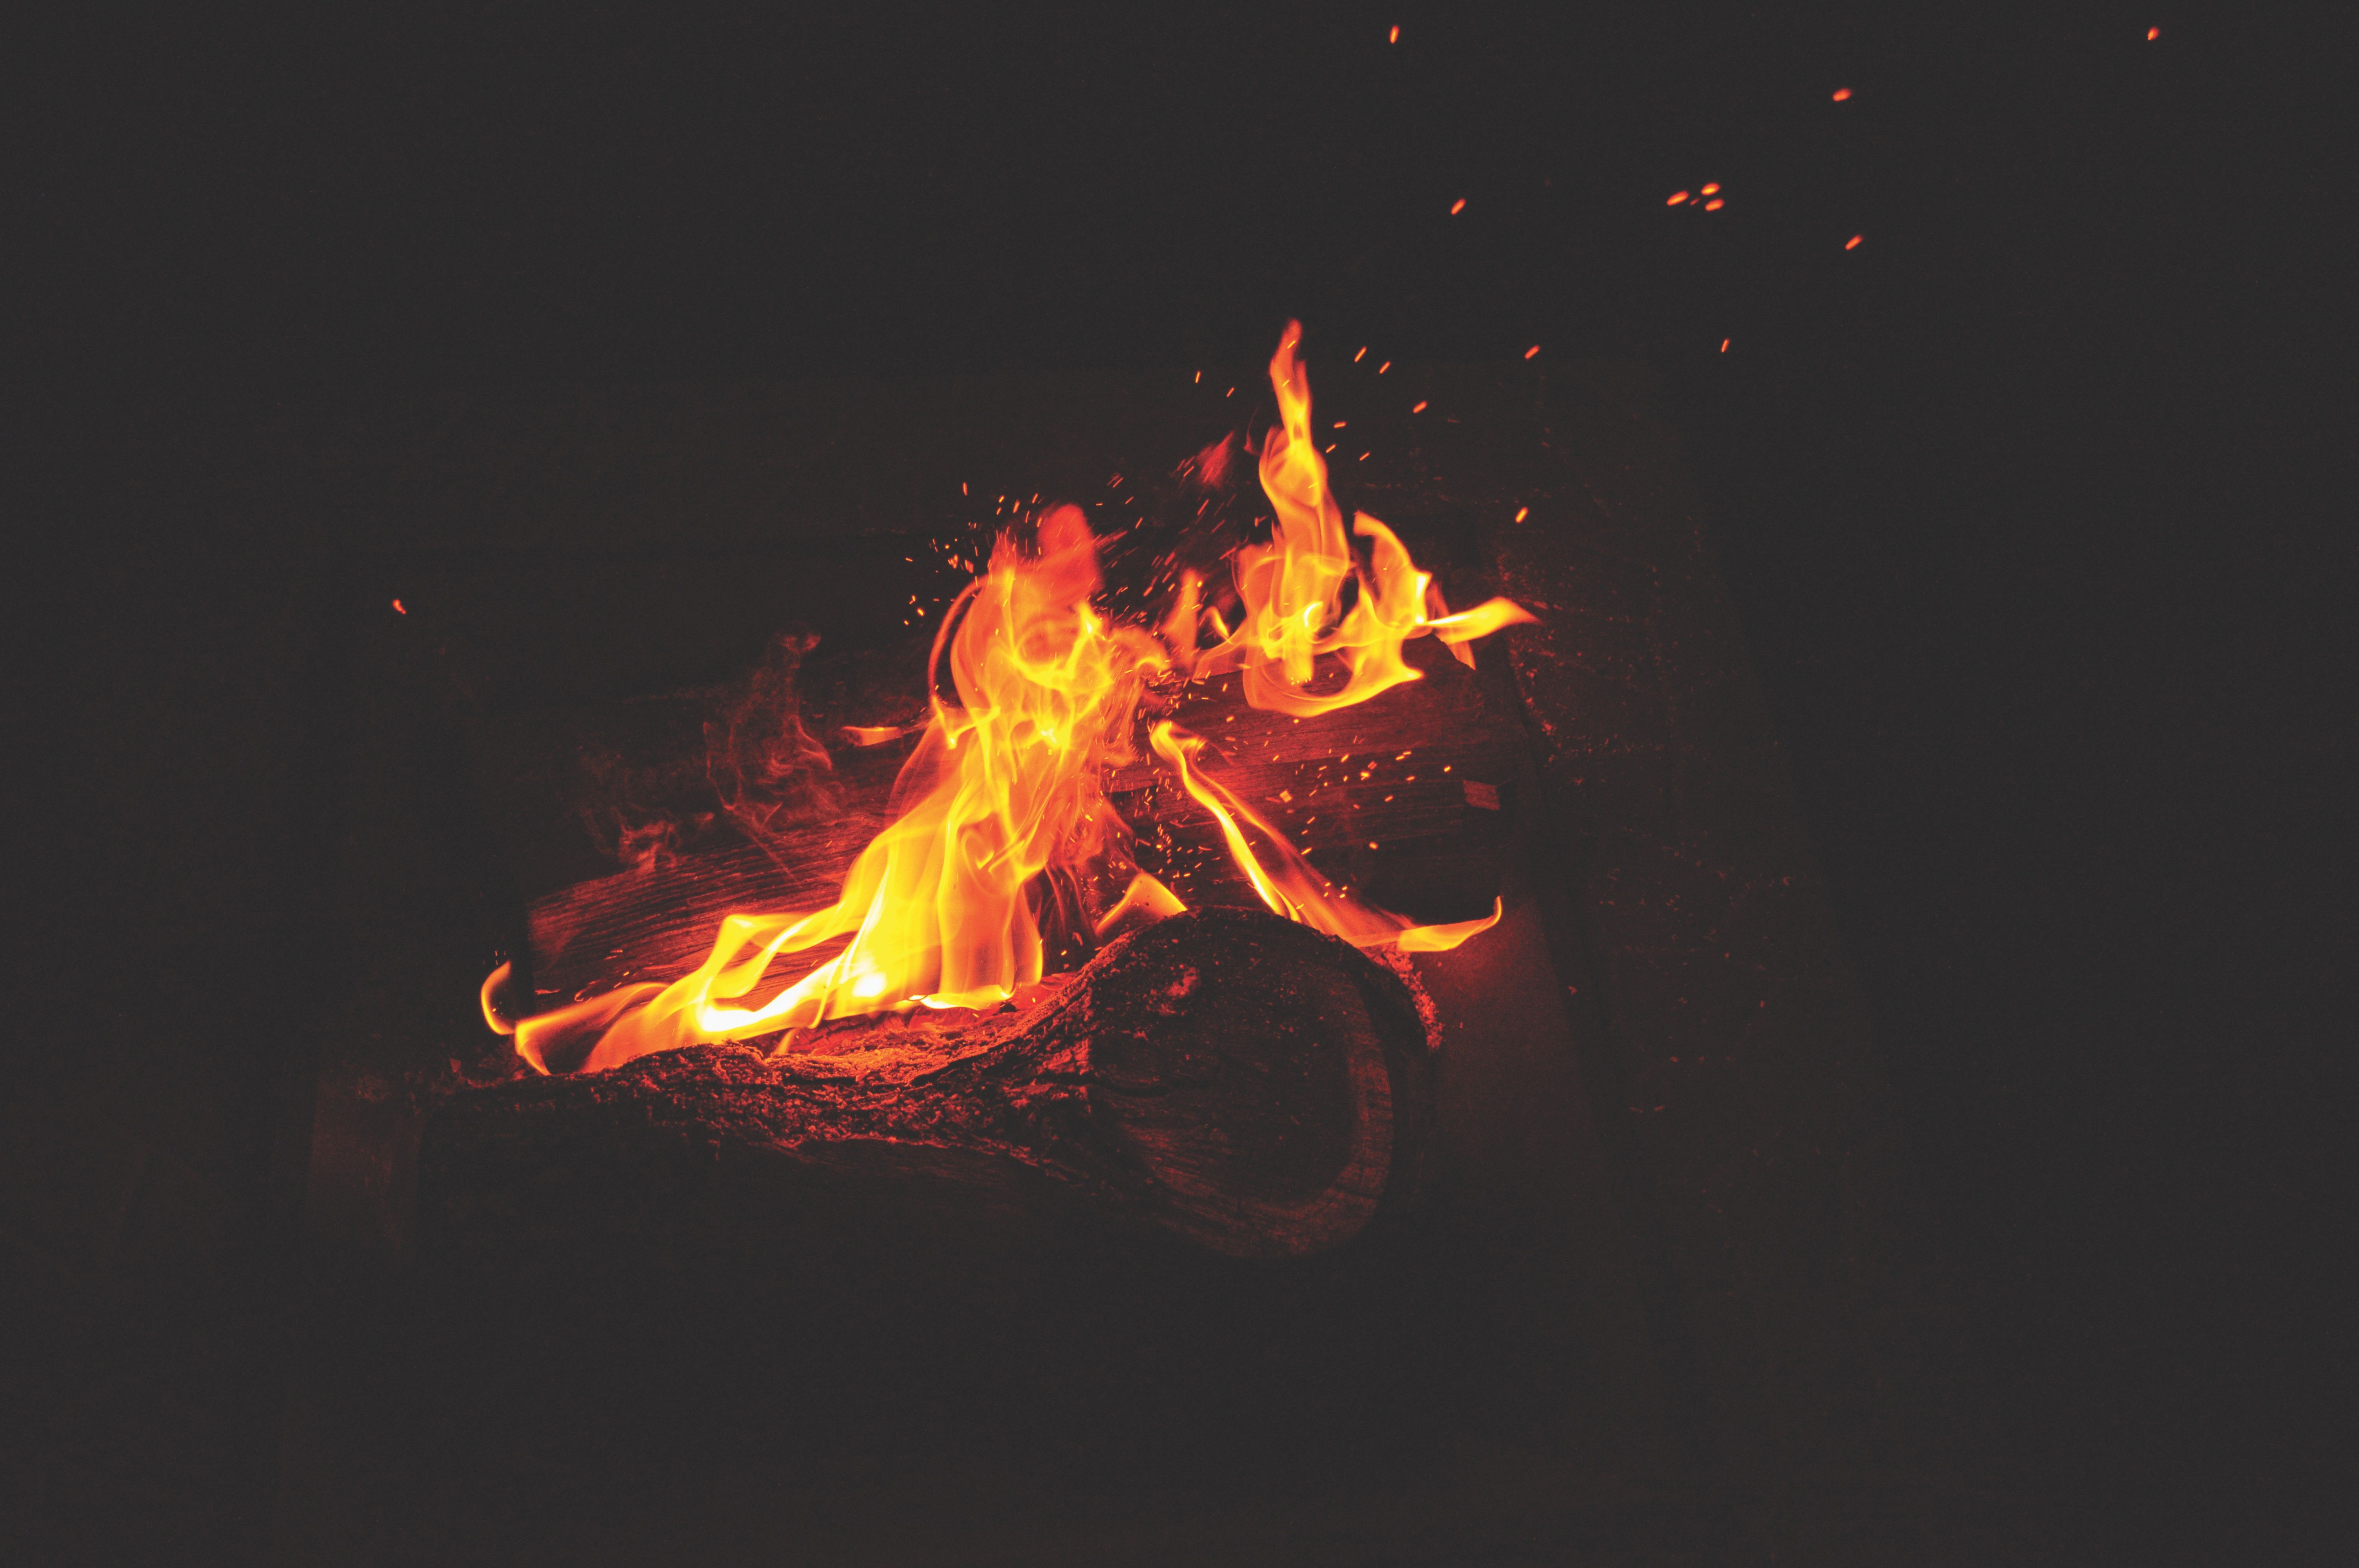 Fondos de pantalla: hoguera, fuego, llamas, chispas 6016x4000 - wallhaven